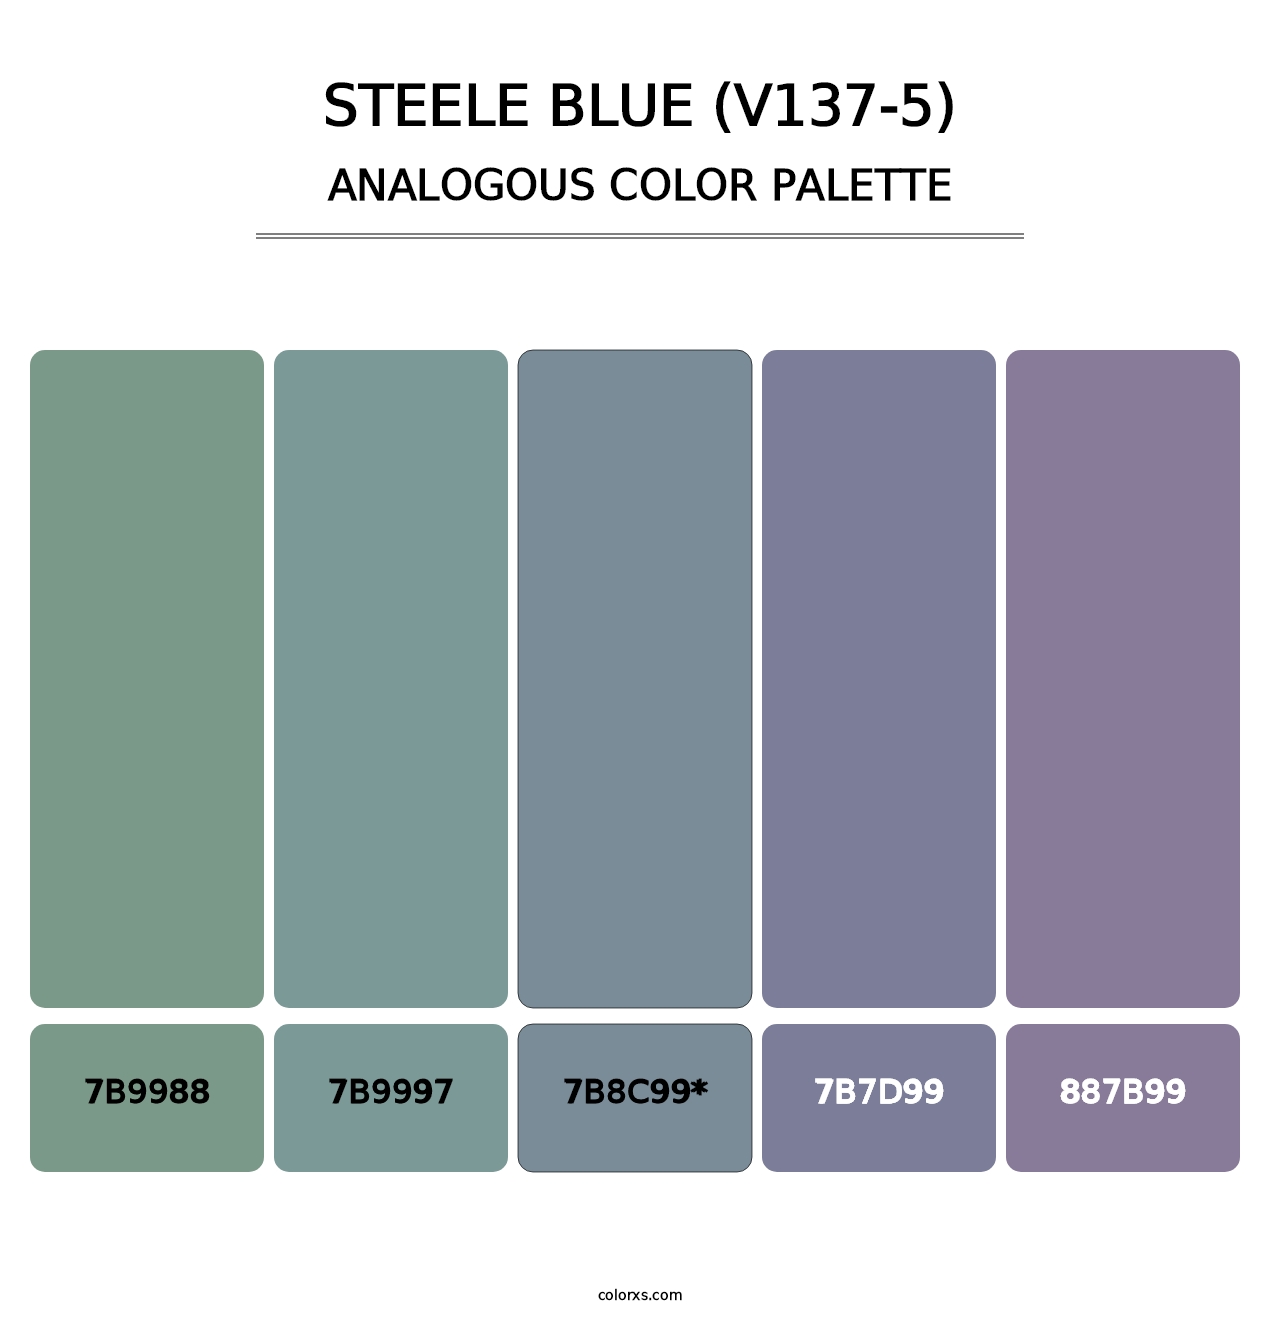 Steele Blue (V137-5) - Analogous Color Palette